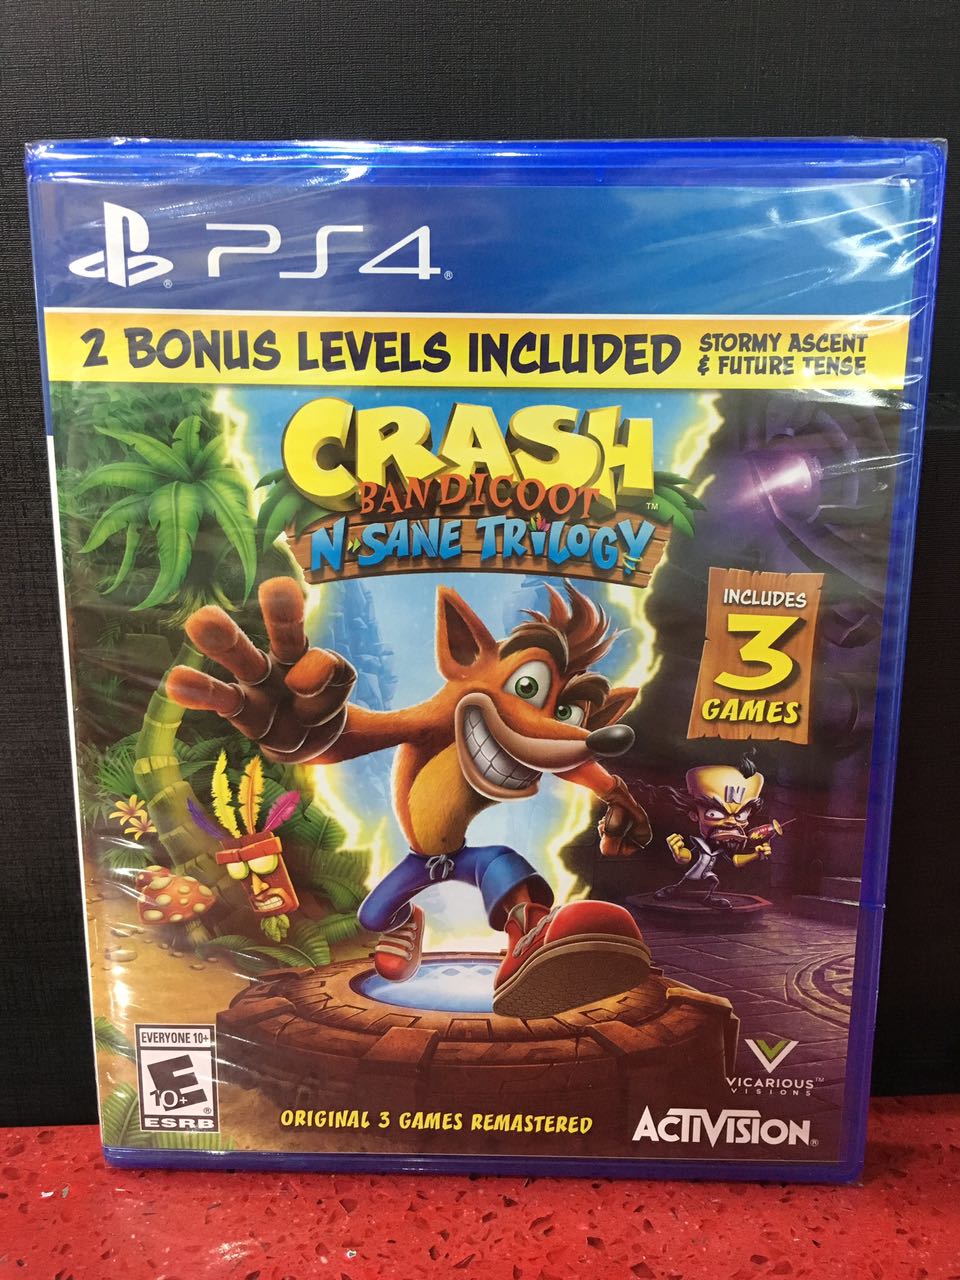 https://gamestation.hn/wp-content/uploads/2017/11/PS4-Crash-Bandicoot-Insane-Trilogy-game.jpg